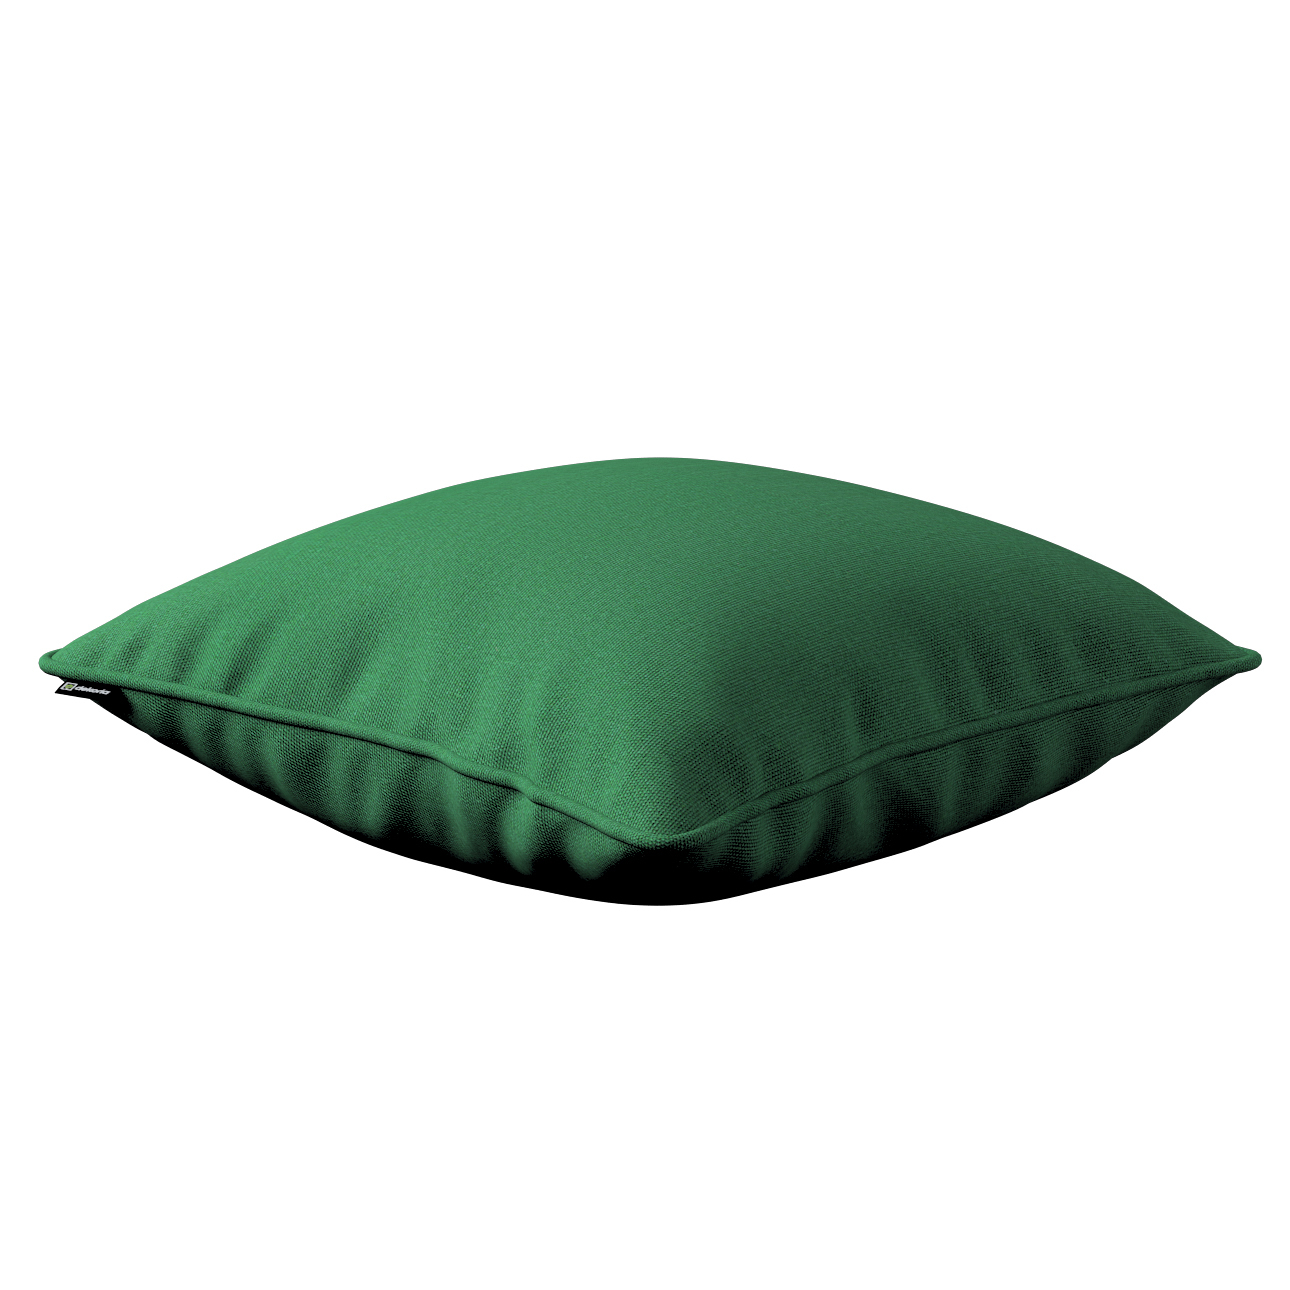 Kissenhülle Gabi mit Paspel, grün, 60 x 60 cm, Loneta (133-18) günstig online kaufen